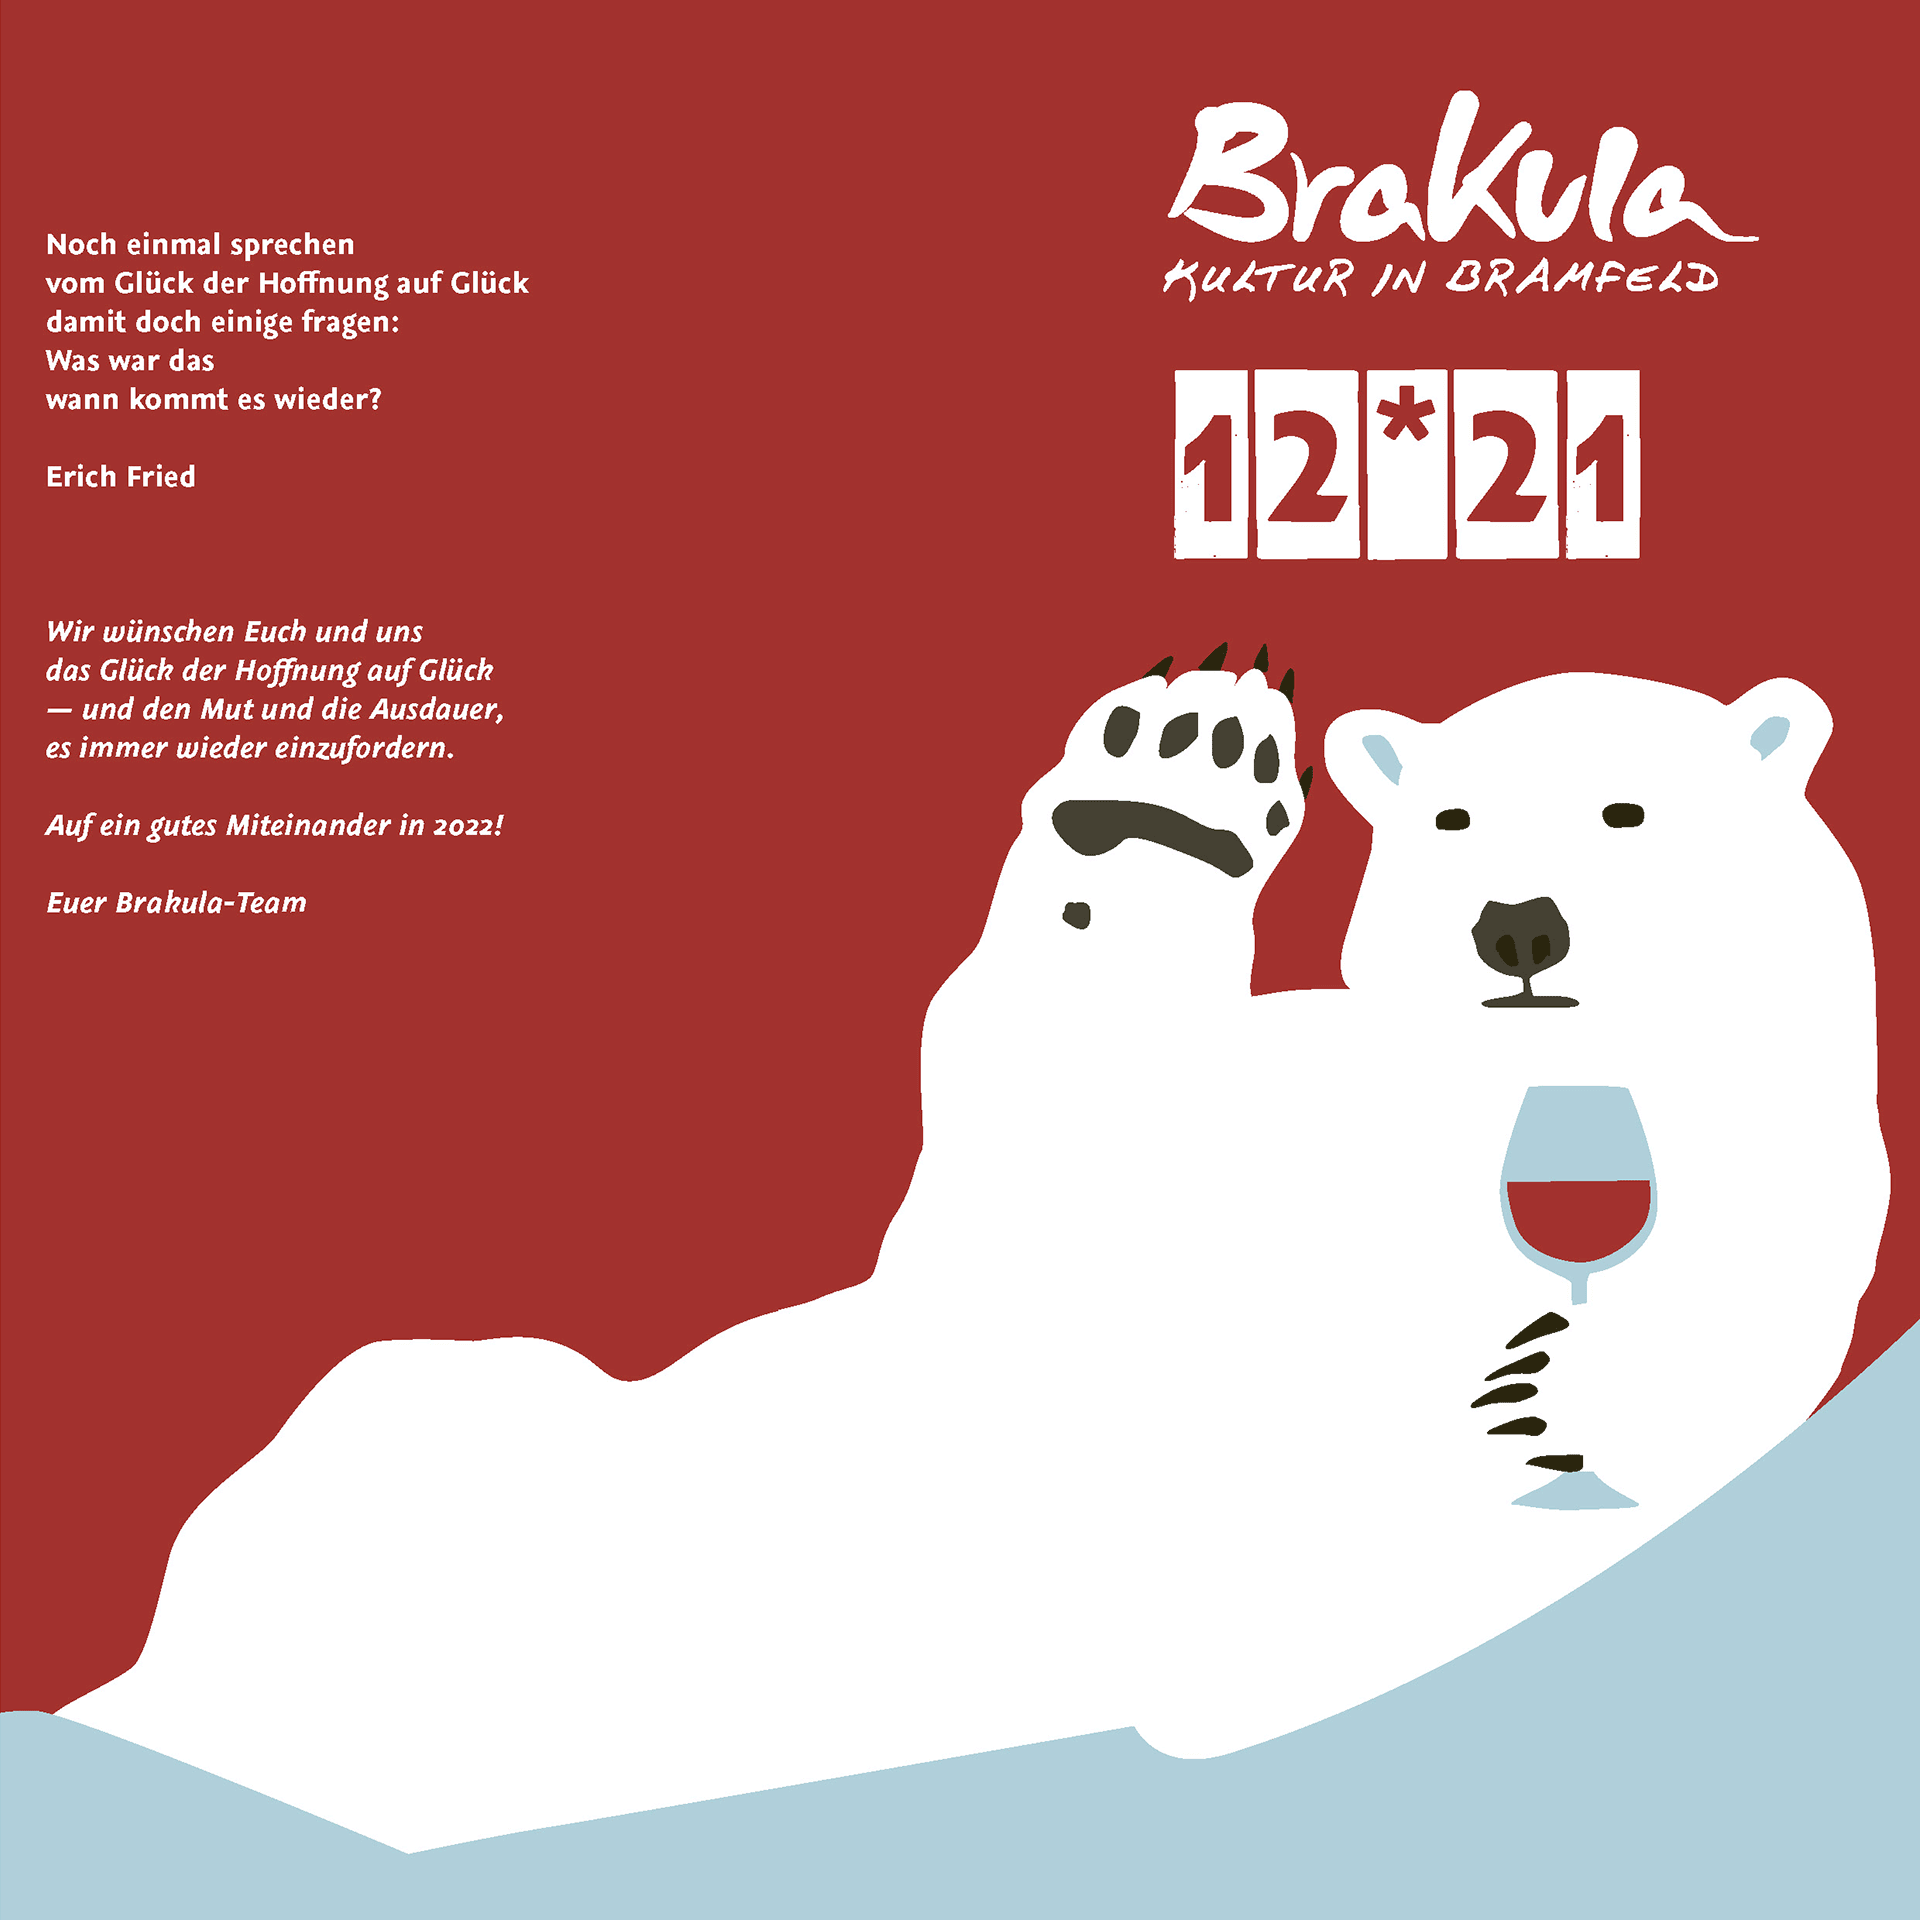 Brakula Programm Eisbären 02